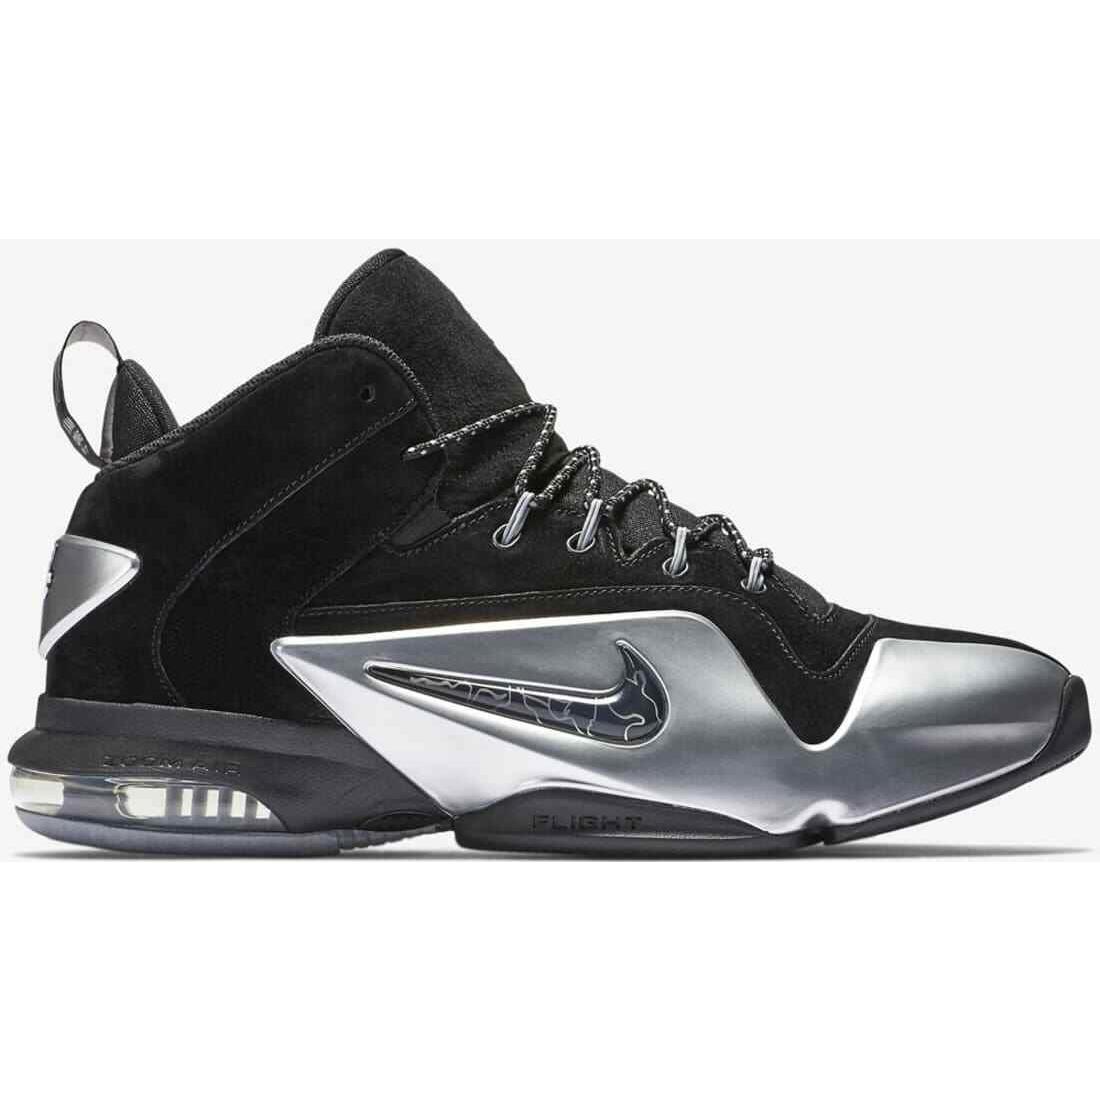 Nike Black Silver Zoom Penny VI Basketball Shoes 749629-002 9